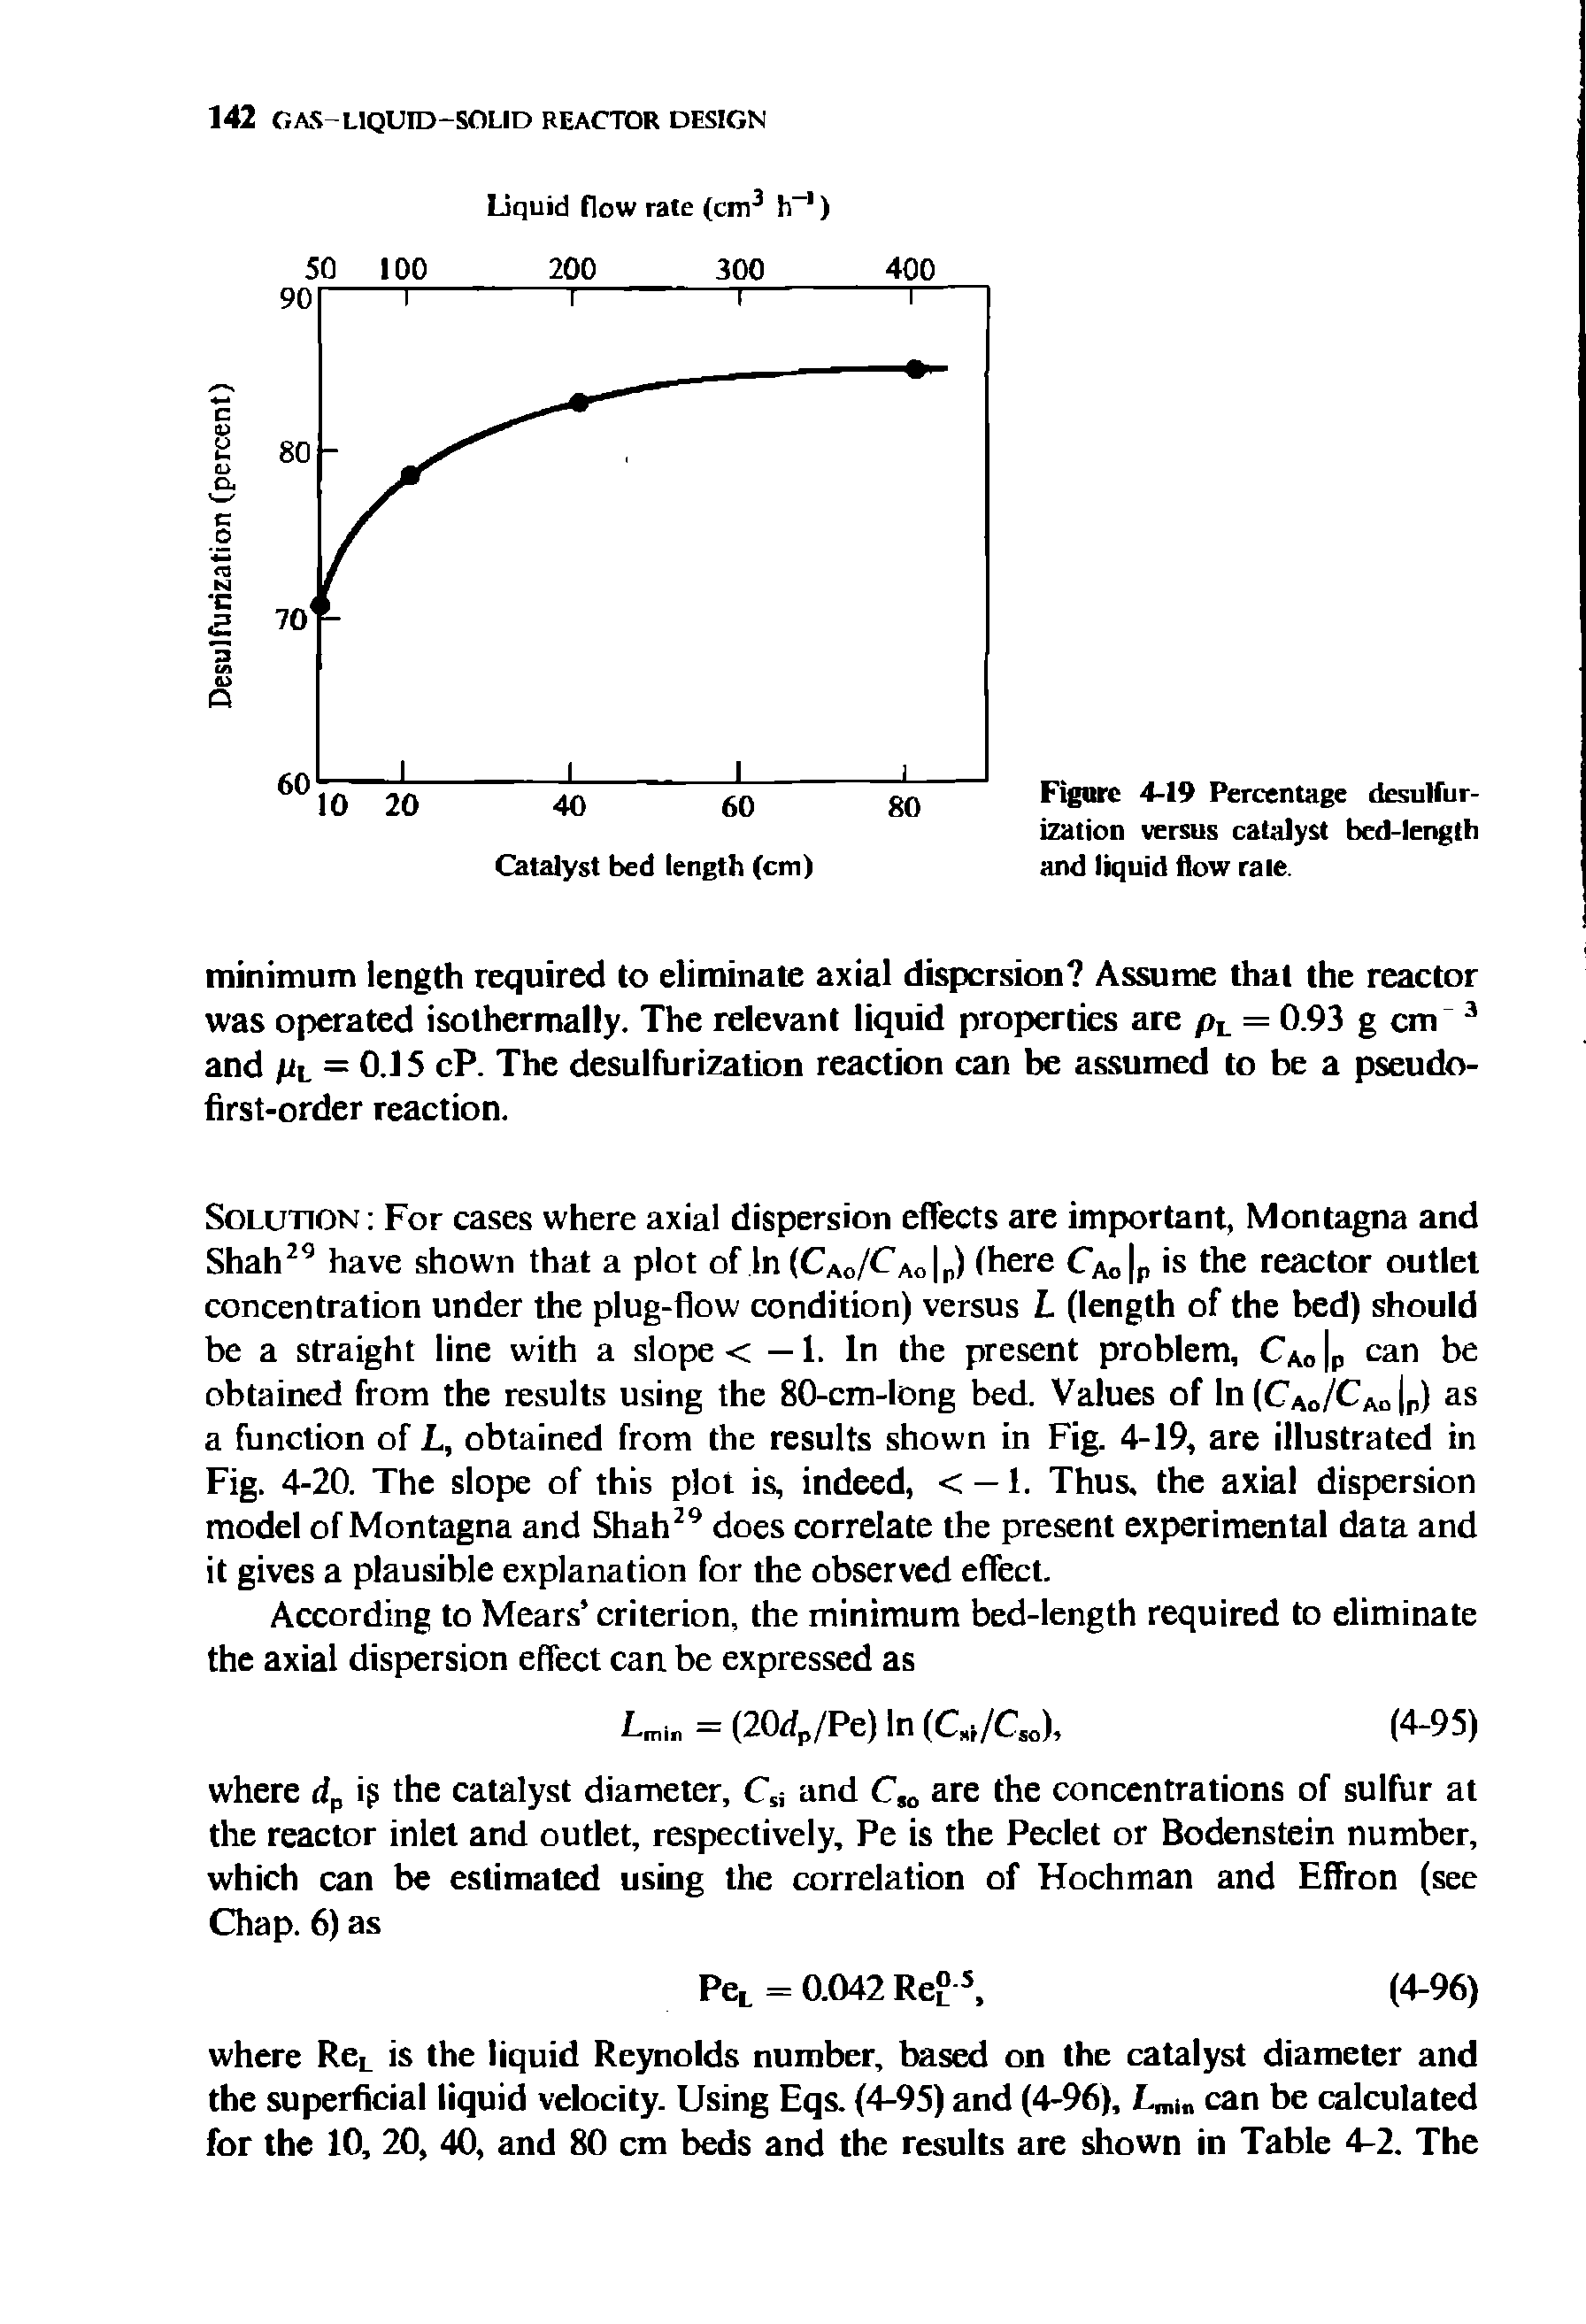 Figure 4-19 Percentage desulfurization versus catalyst bed-length and liquid flow rate.